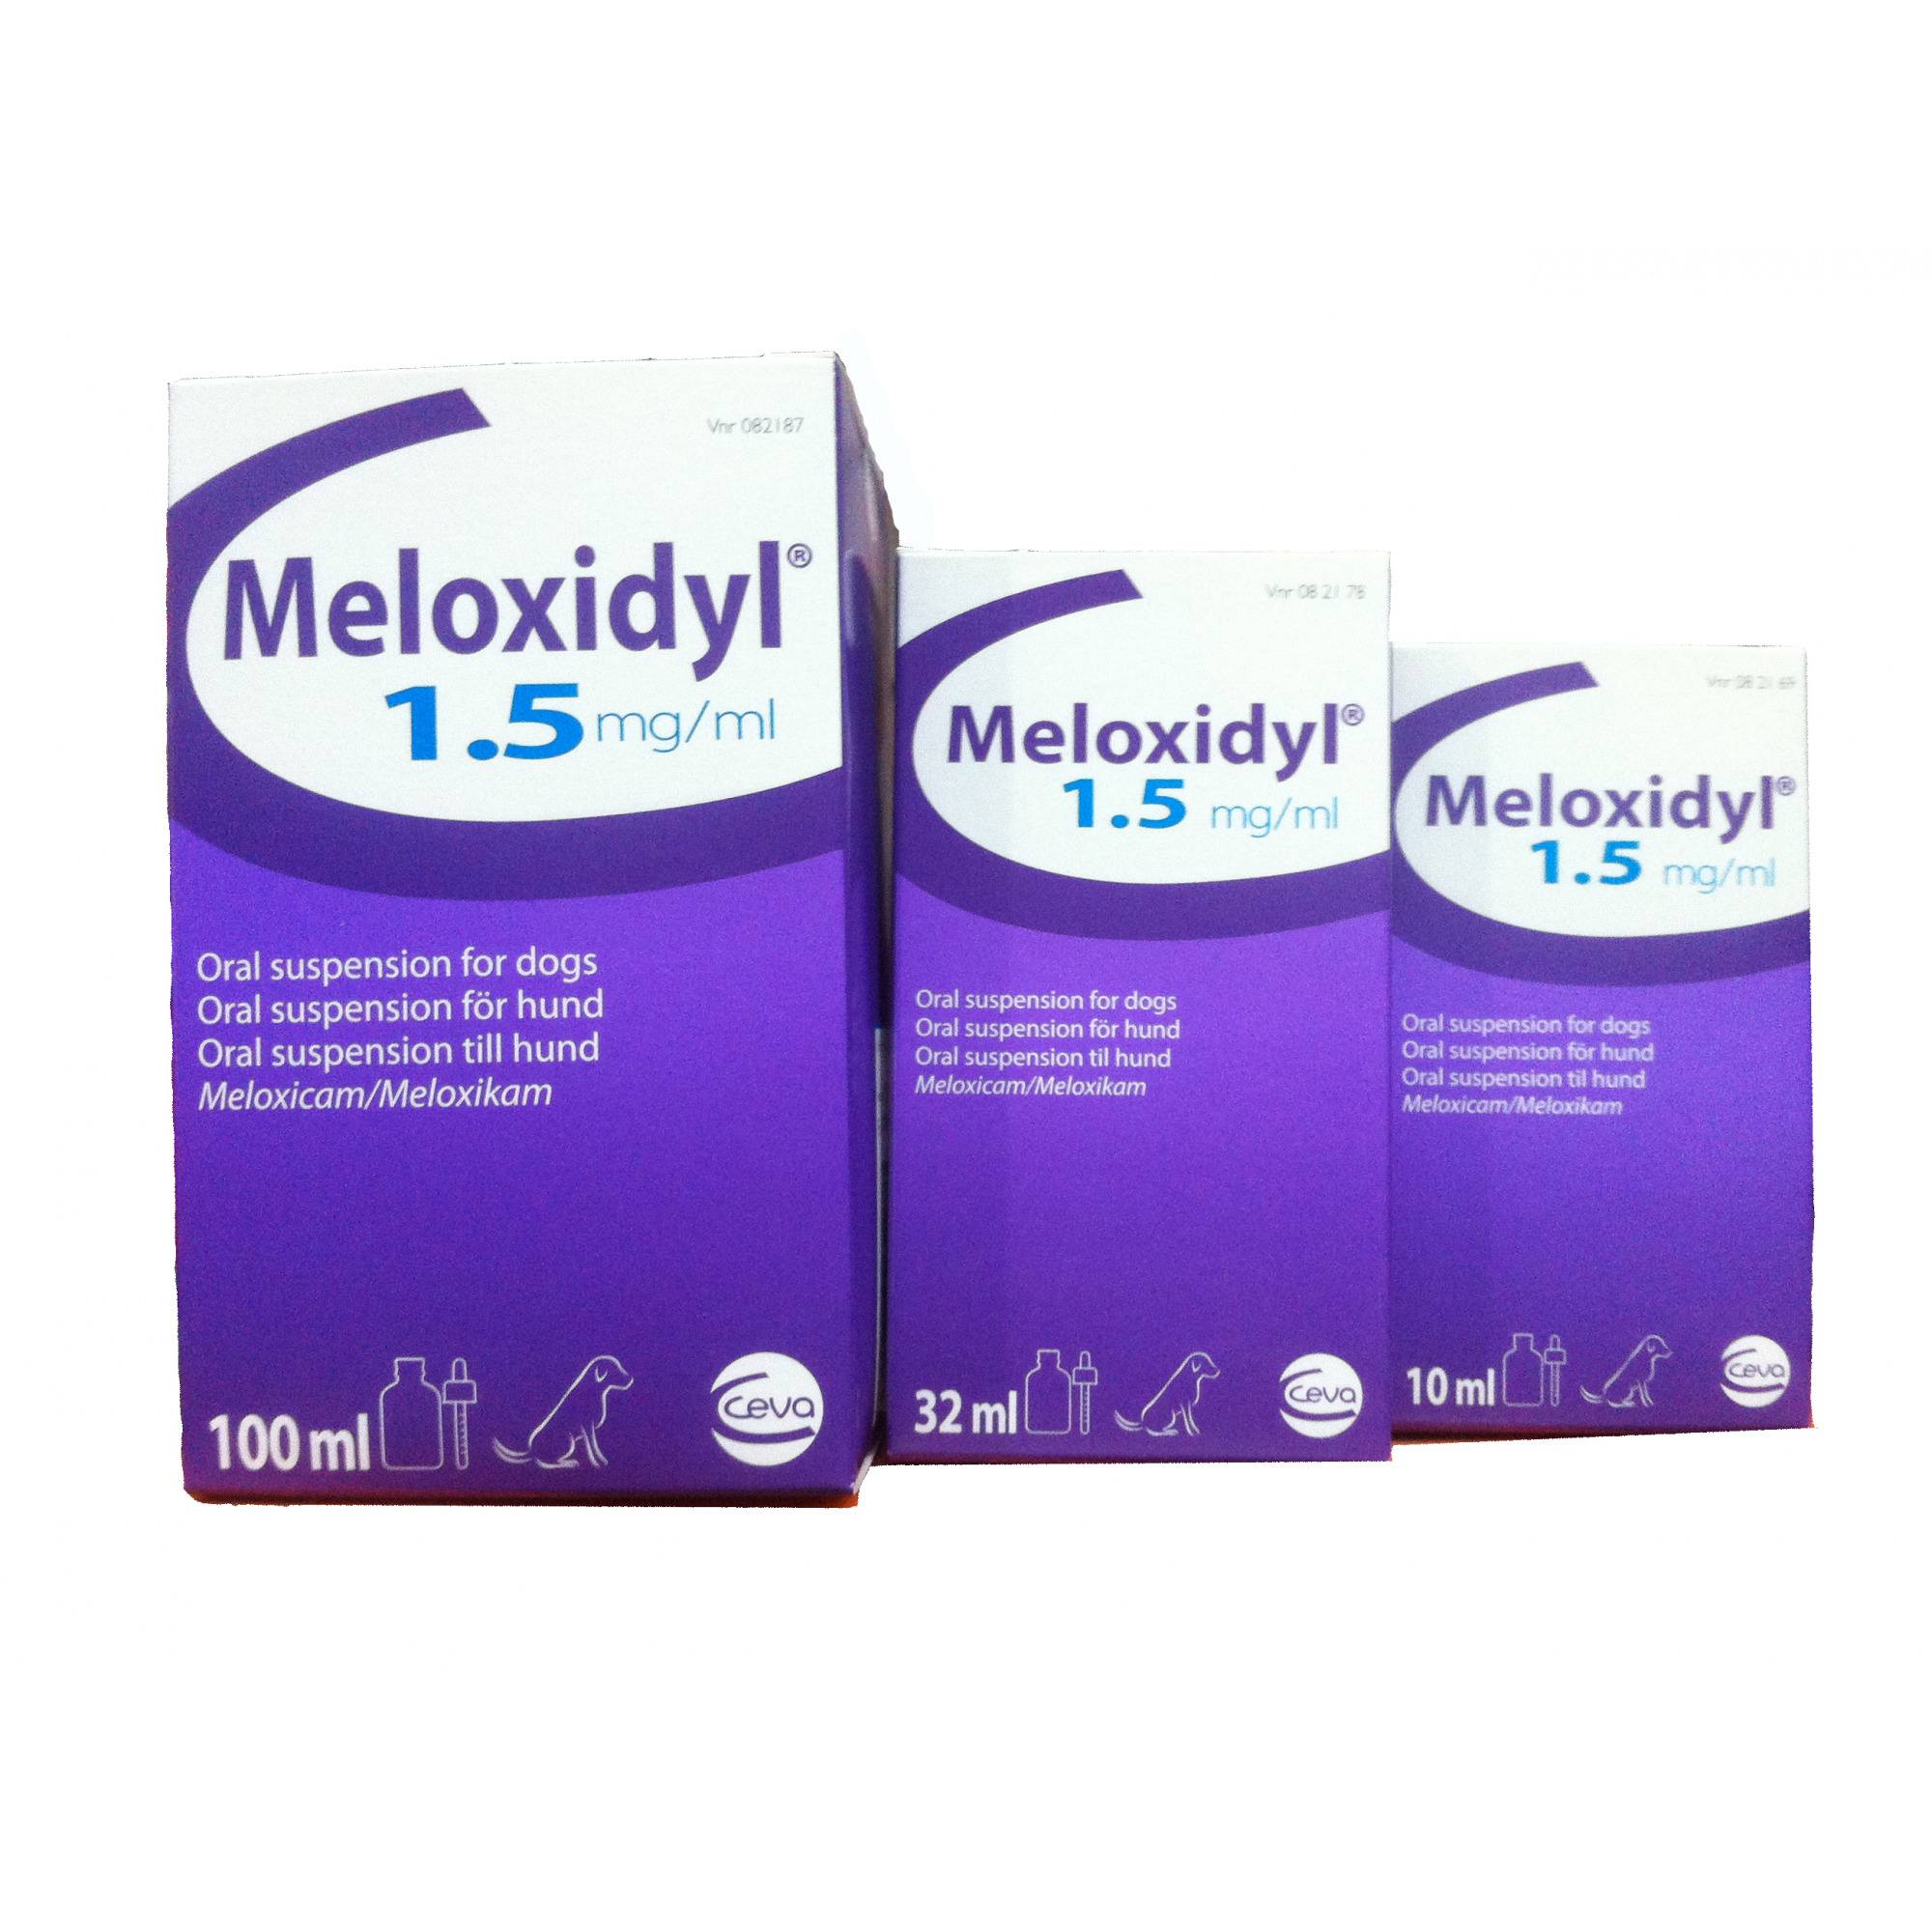 Meloxidyl | Meloxidyl Oral Liquid | Meloxidyl for 🐶 Dogs